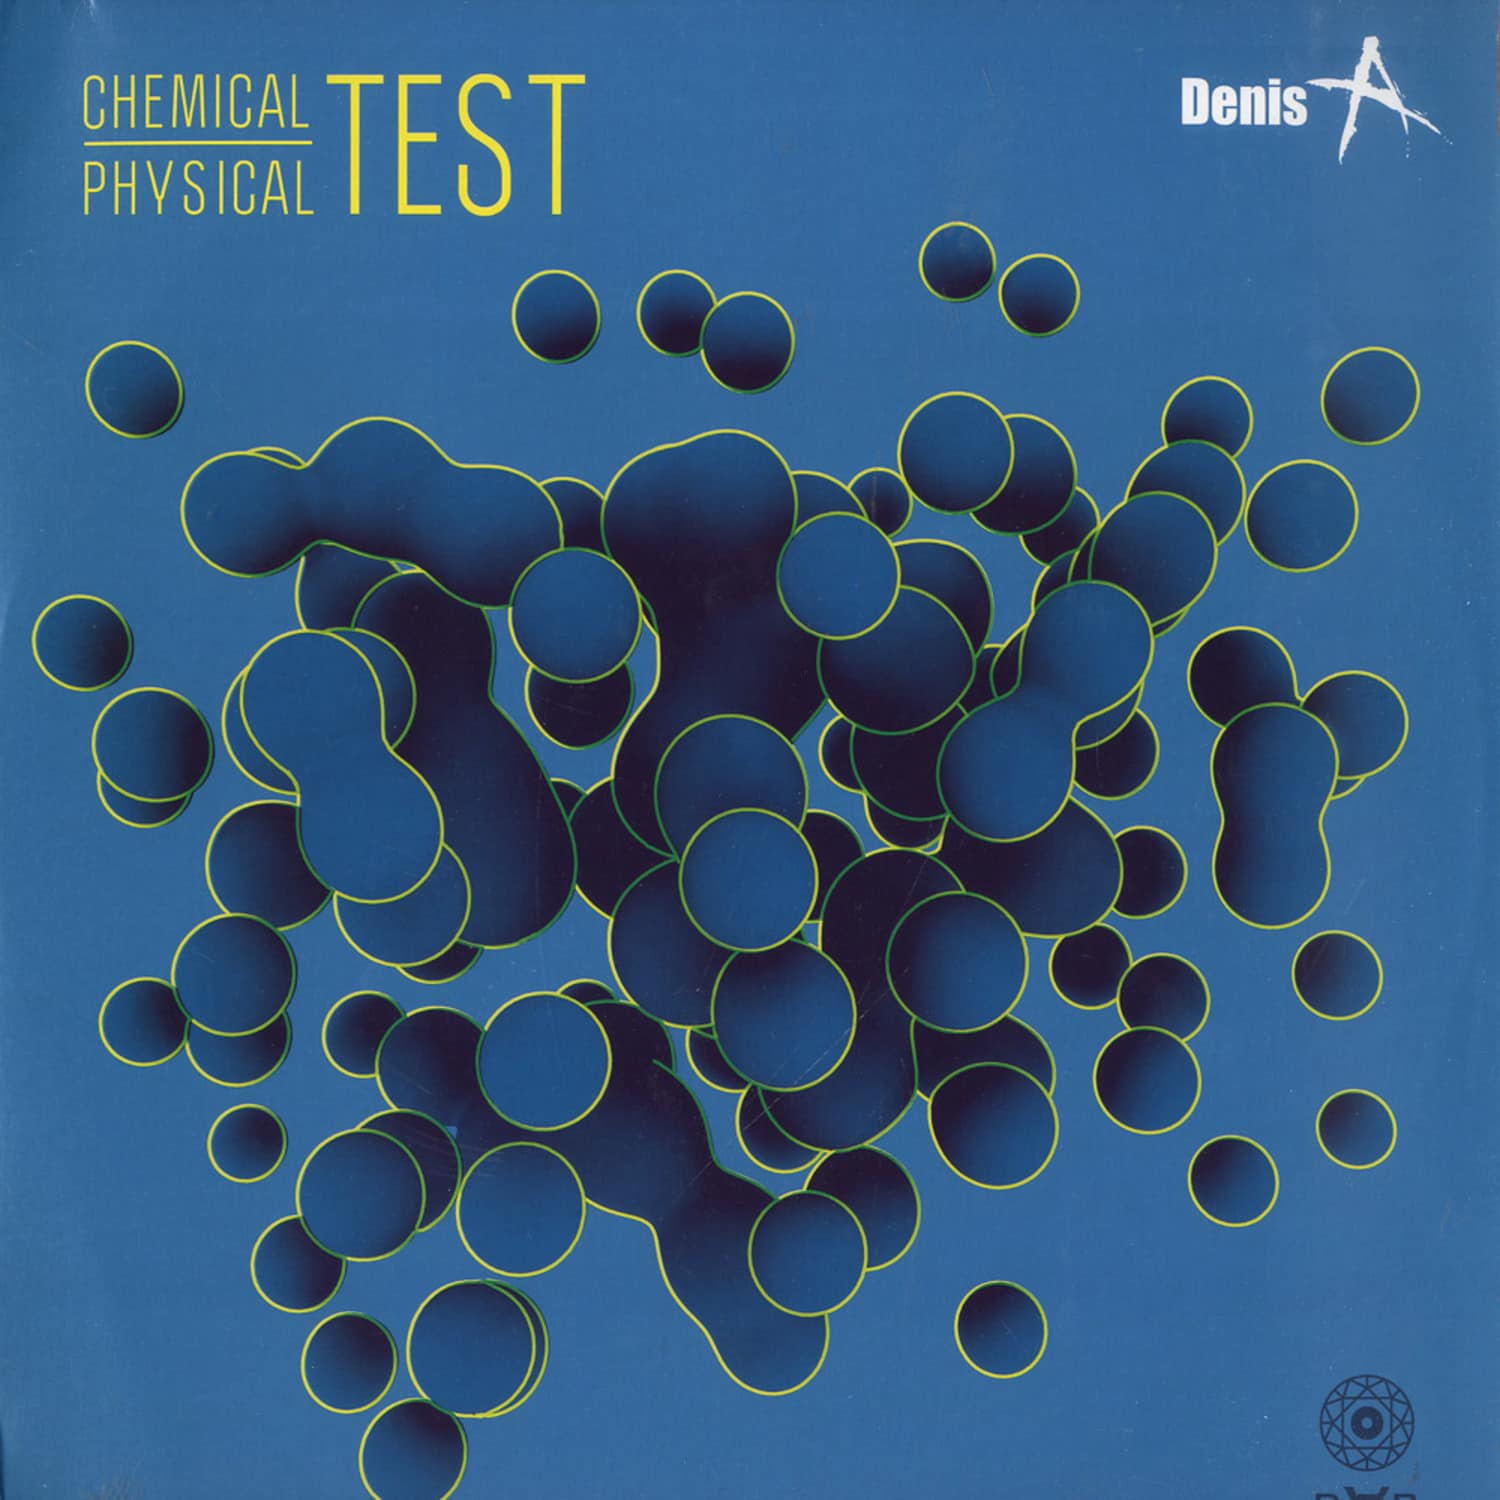 Denis A - CHEMICAL TEST